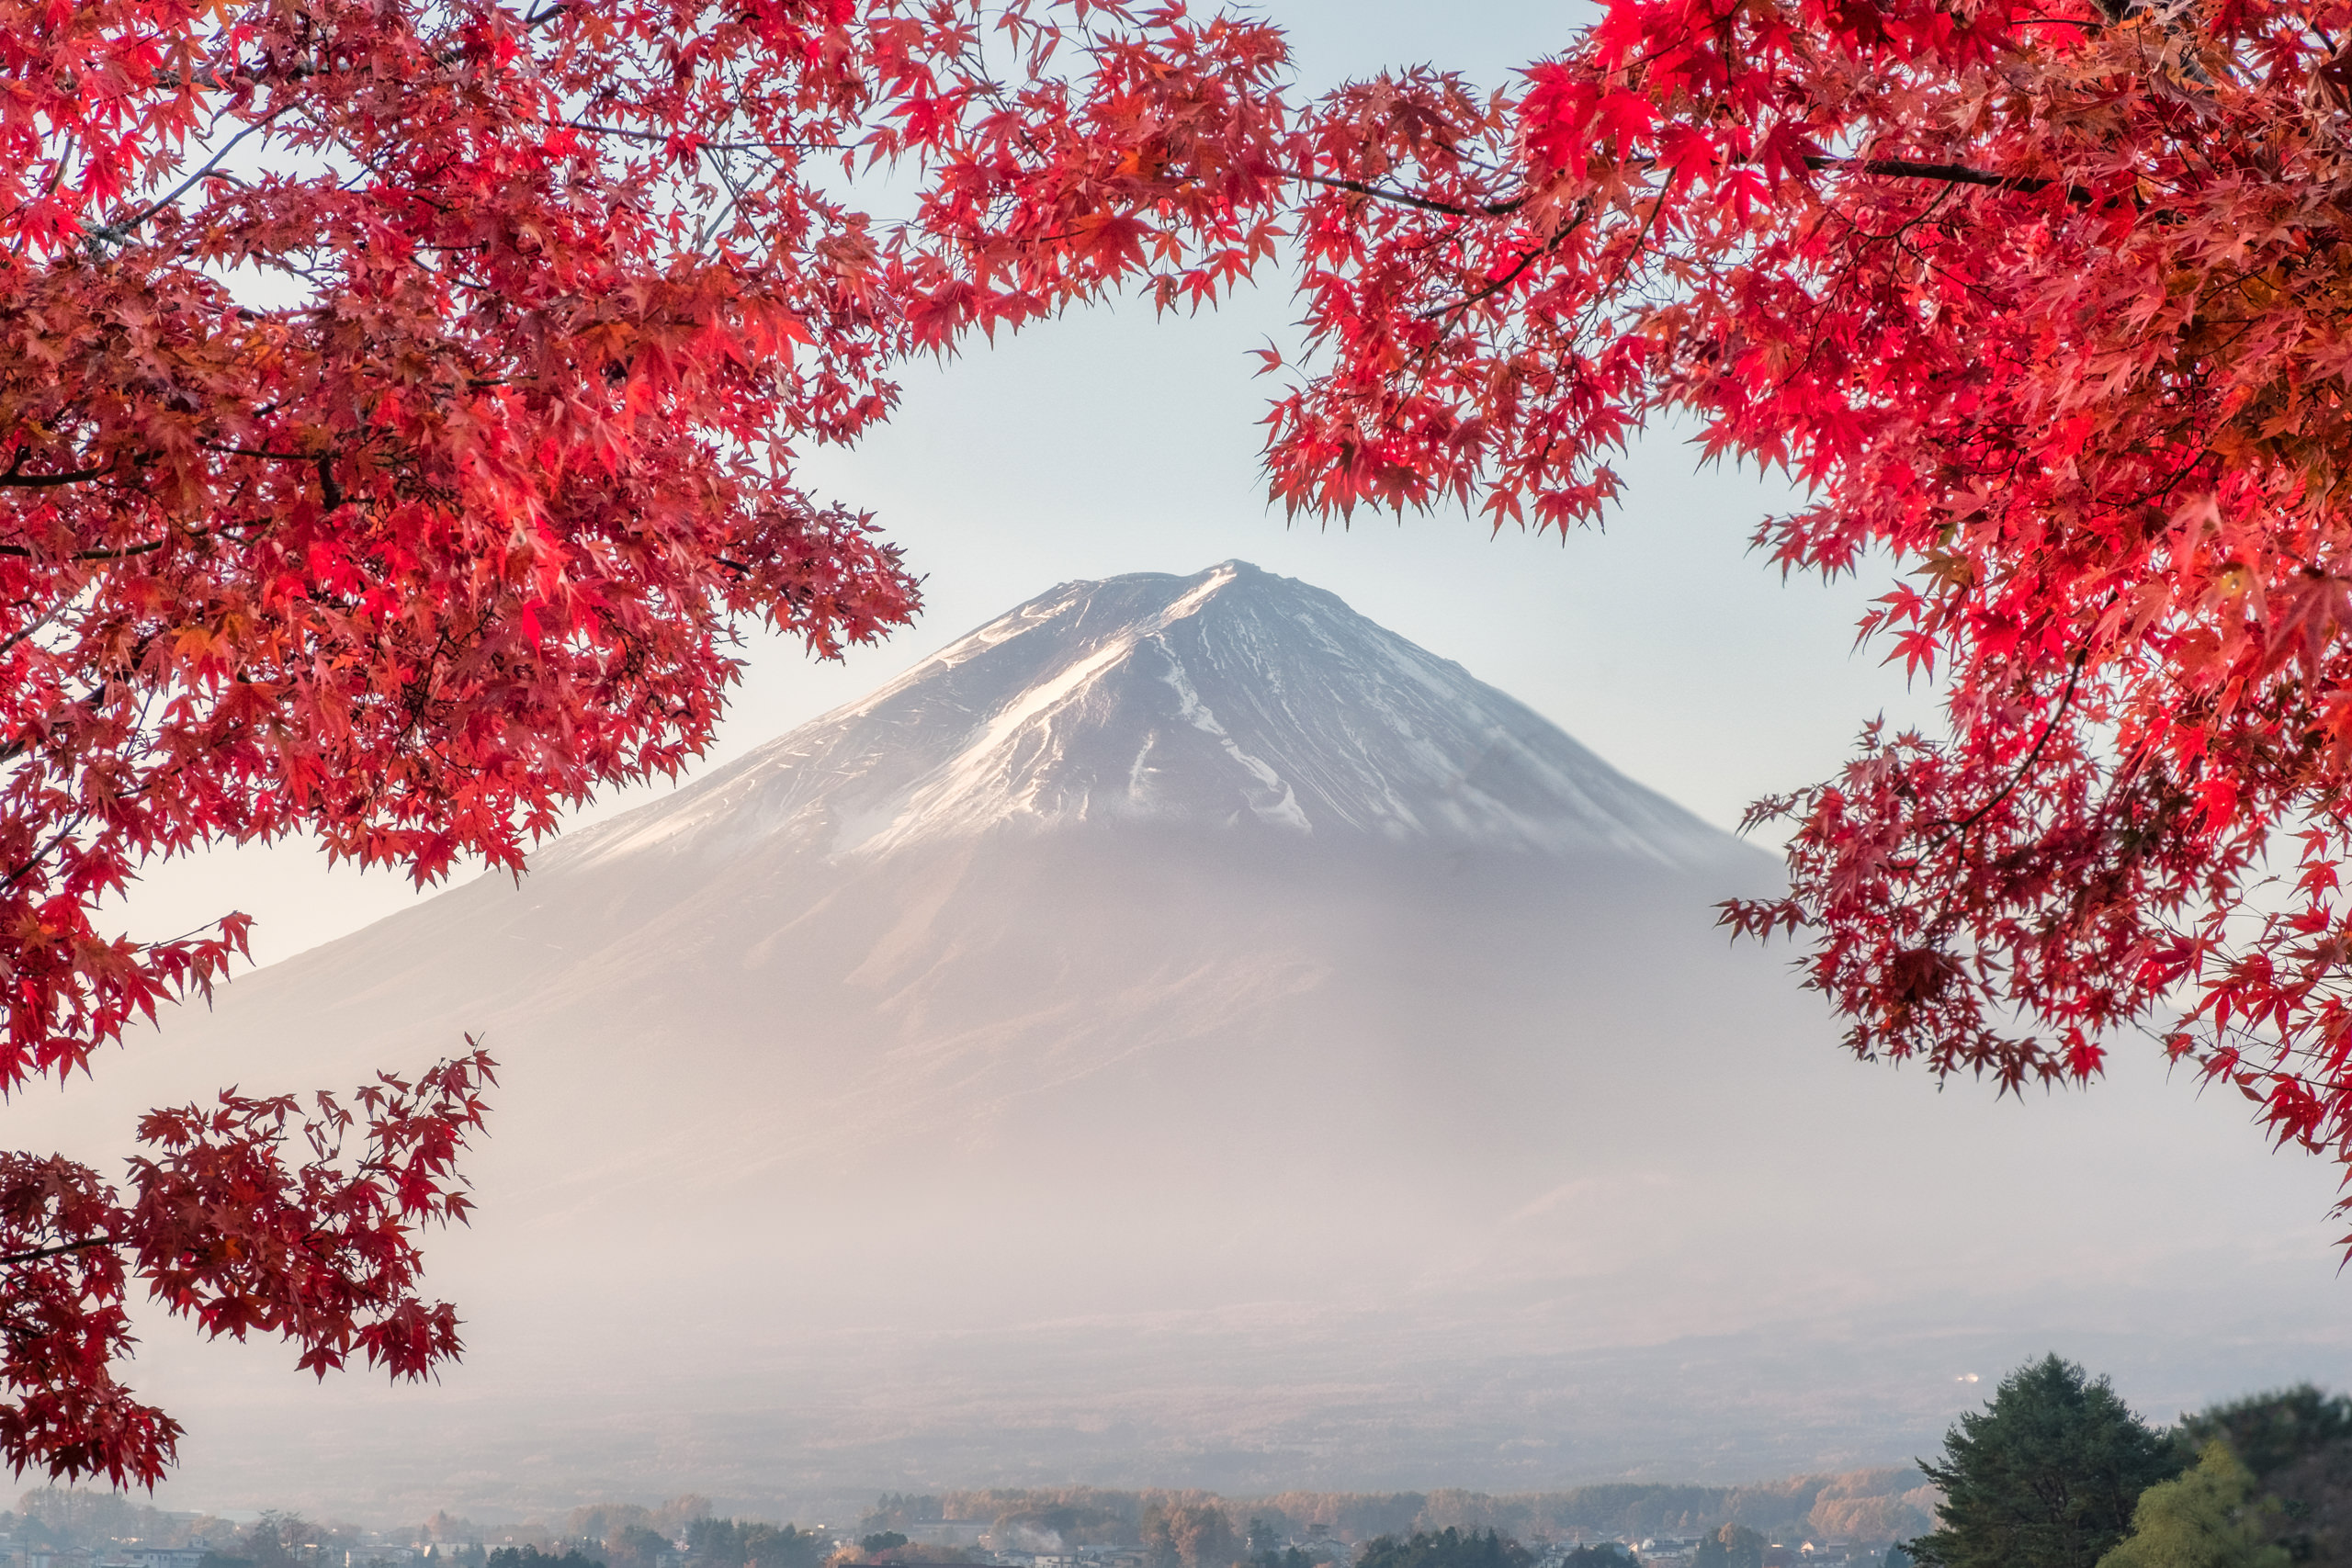 mount-fuji-with-red-maple-leaves-cover-morning-kawaguchiko-lake.jpg